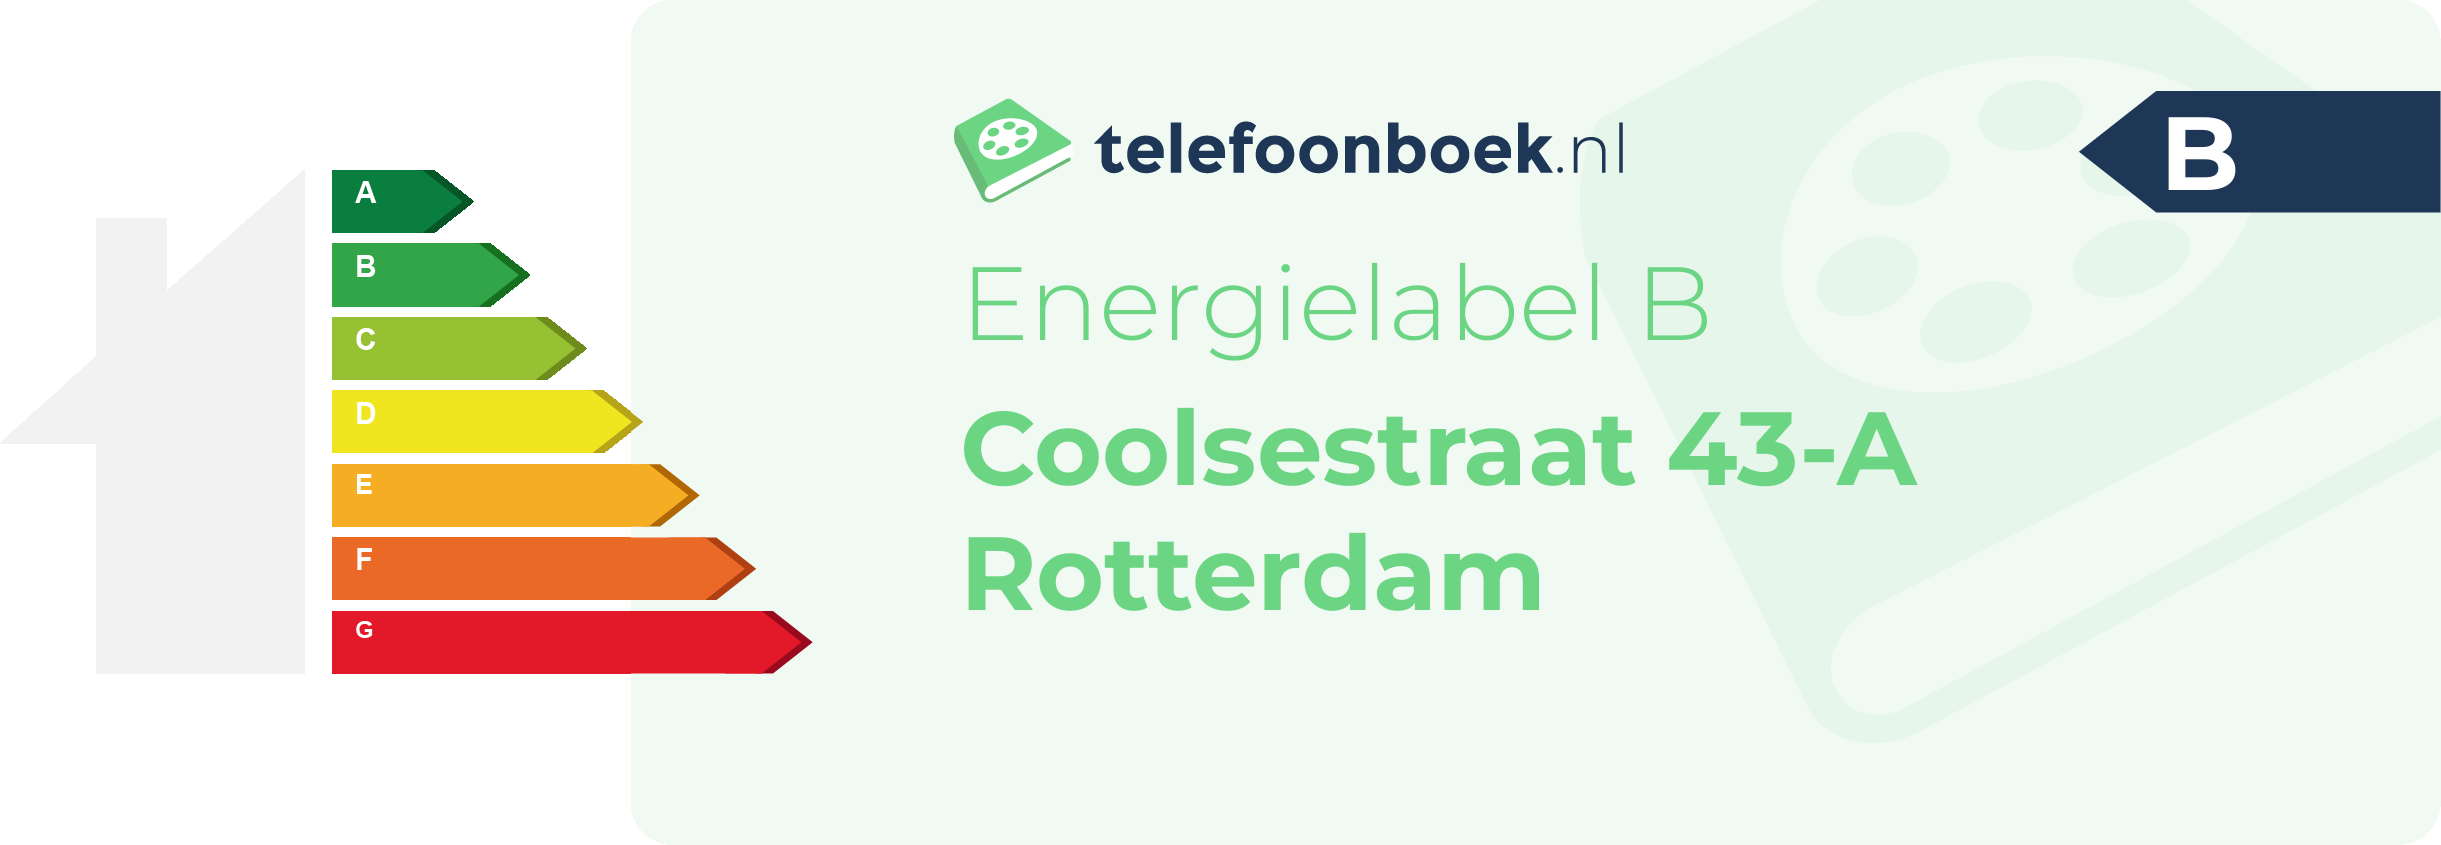 Energielabel Coolsestraat 43-A Rotterdam